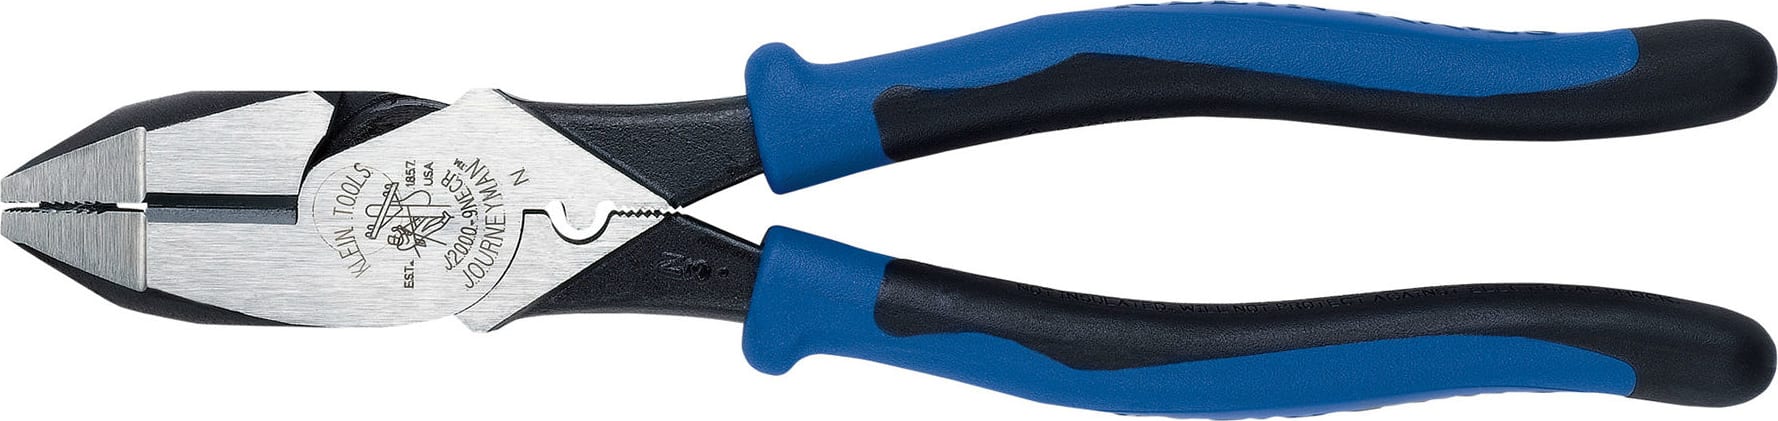 Klein Tools J2000-9NECR Heavy Duty Side Cutting Pliers Crimping